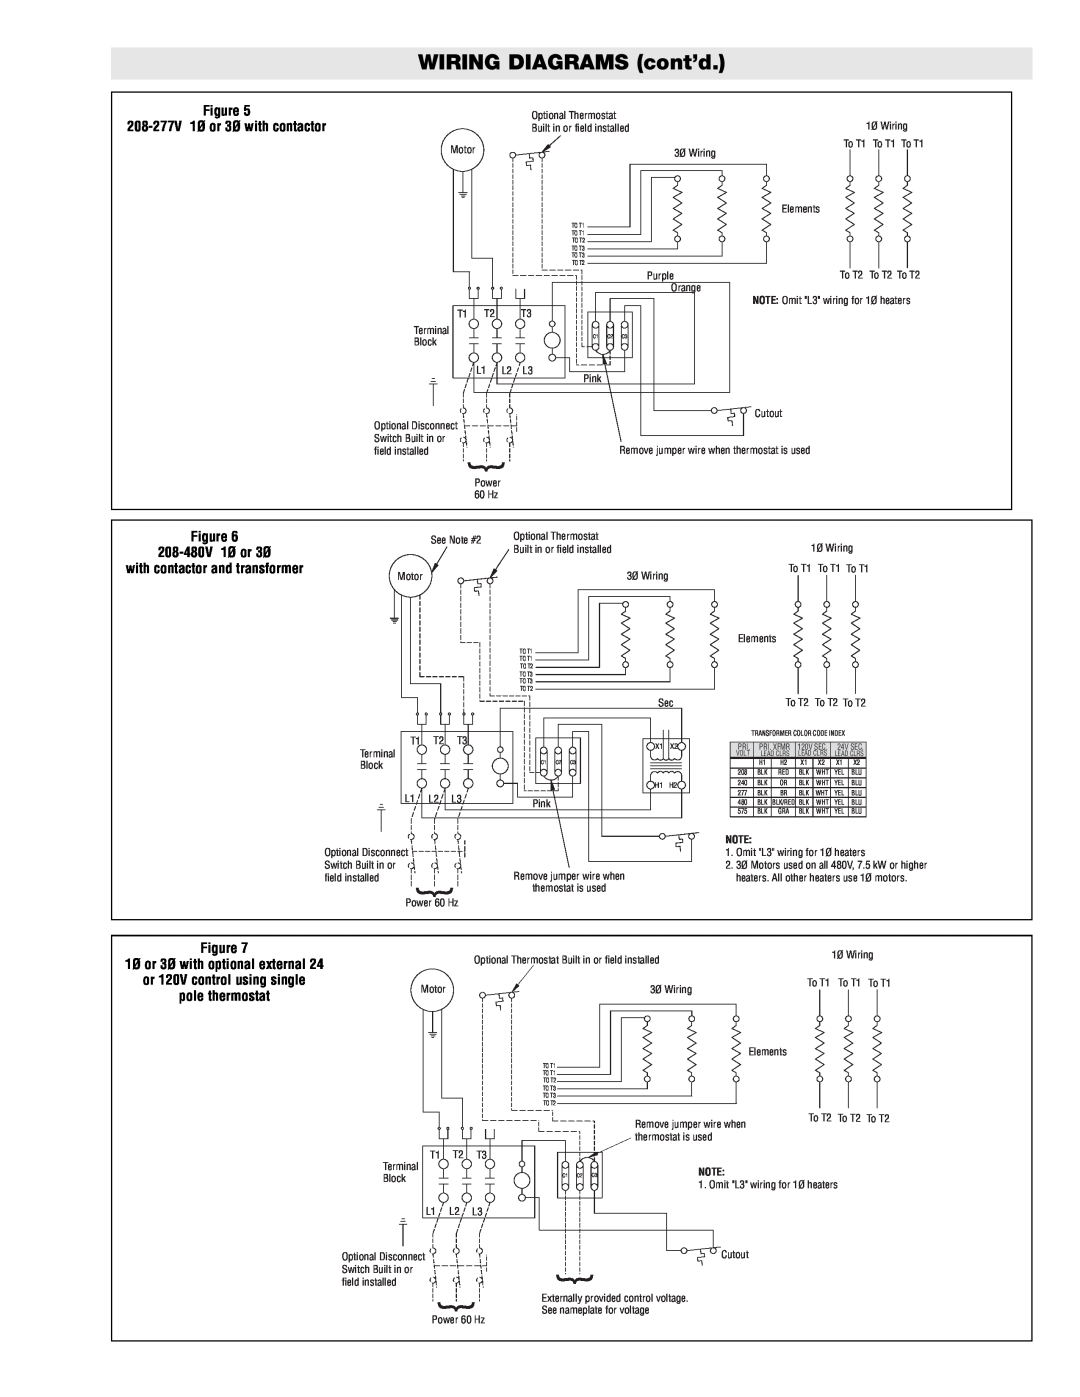 Chromalox HVH-TK5, HVH-TK6 WIRING DIAGRAMS cont’d, 208-277V 1Ø or 3Ø with contactor, 208-480V 1Ø or 3Ø, pole thermostat 